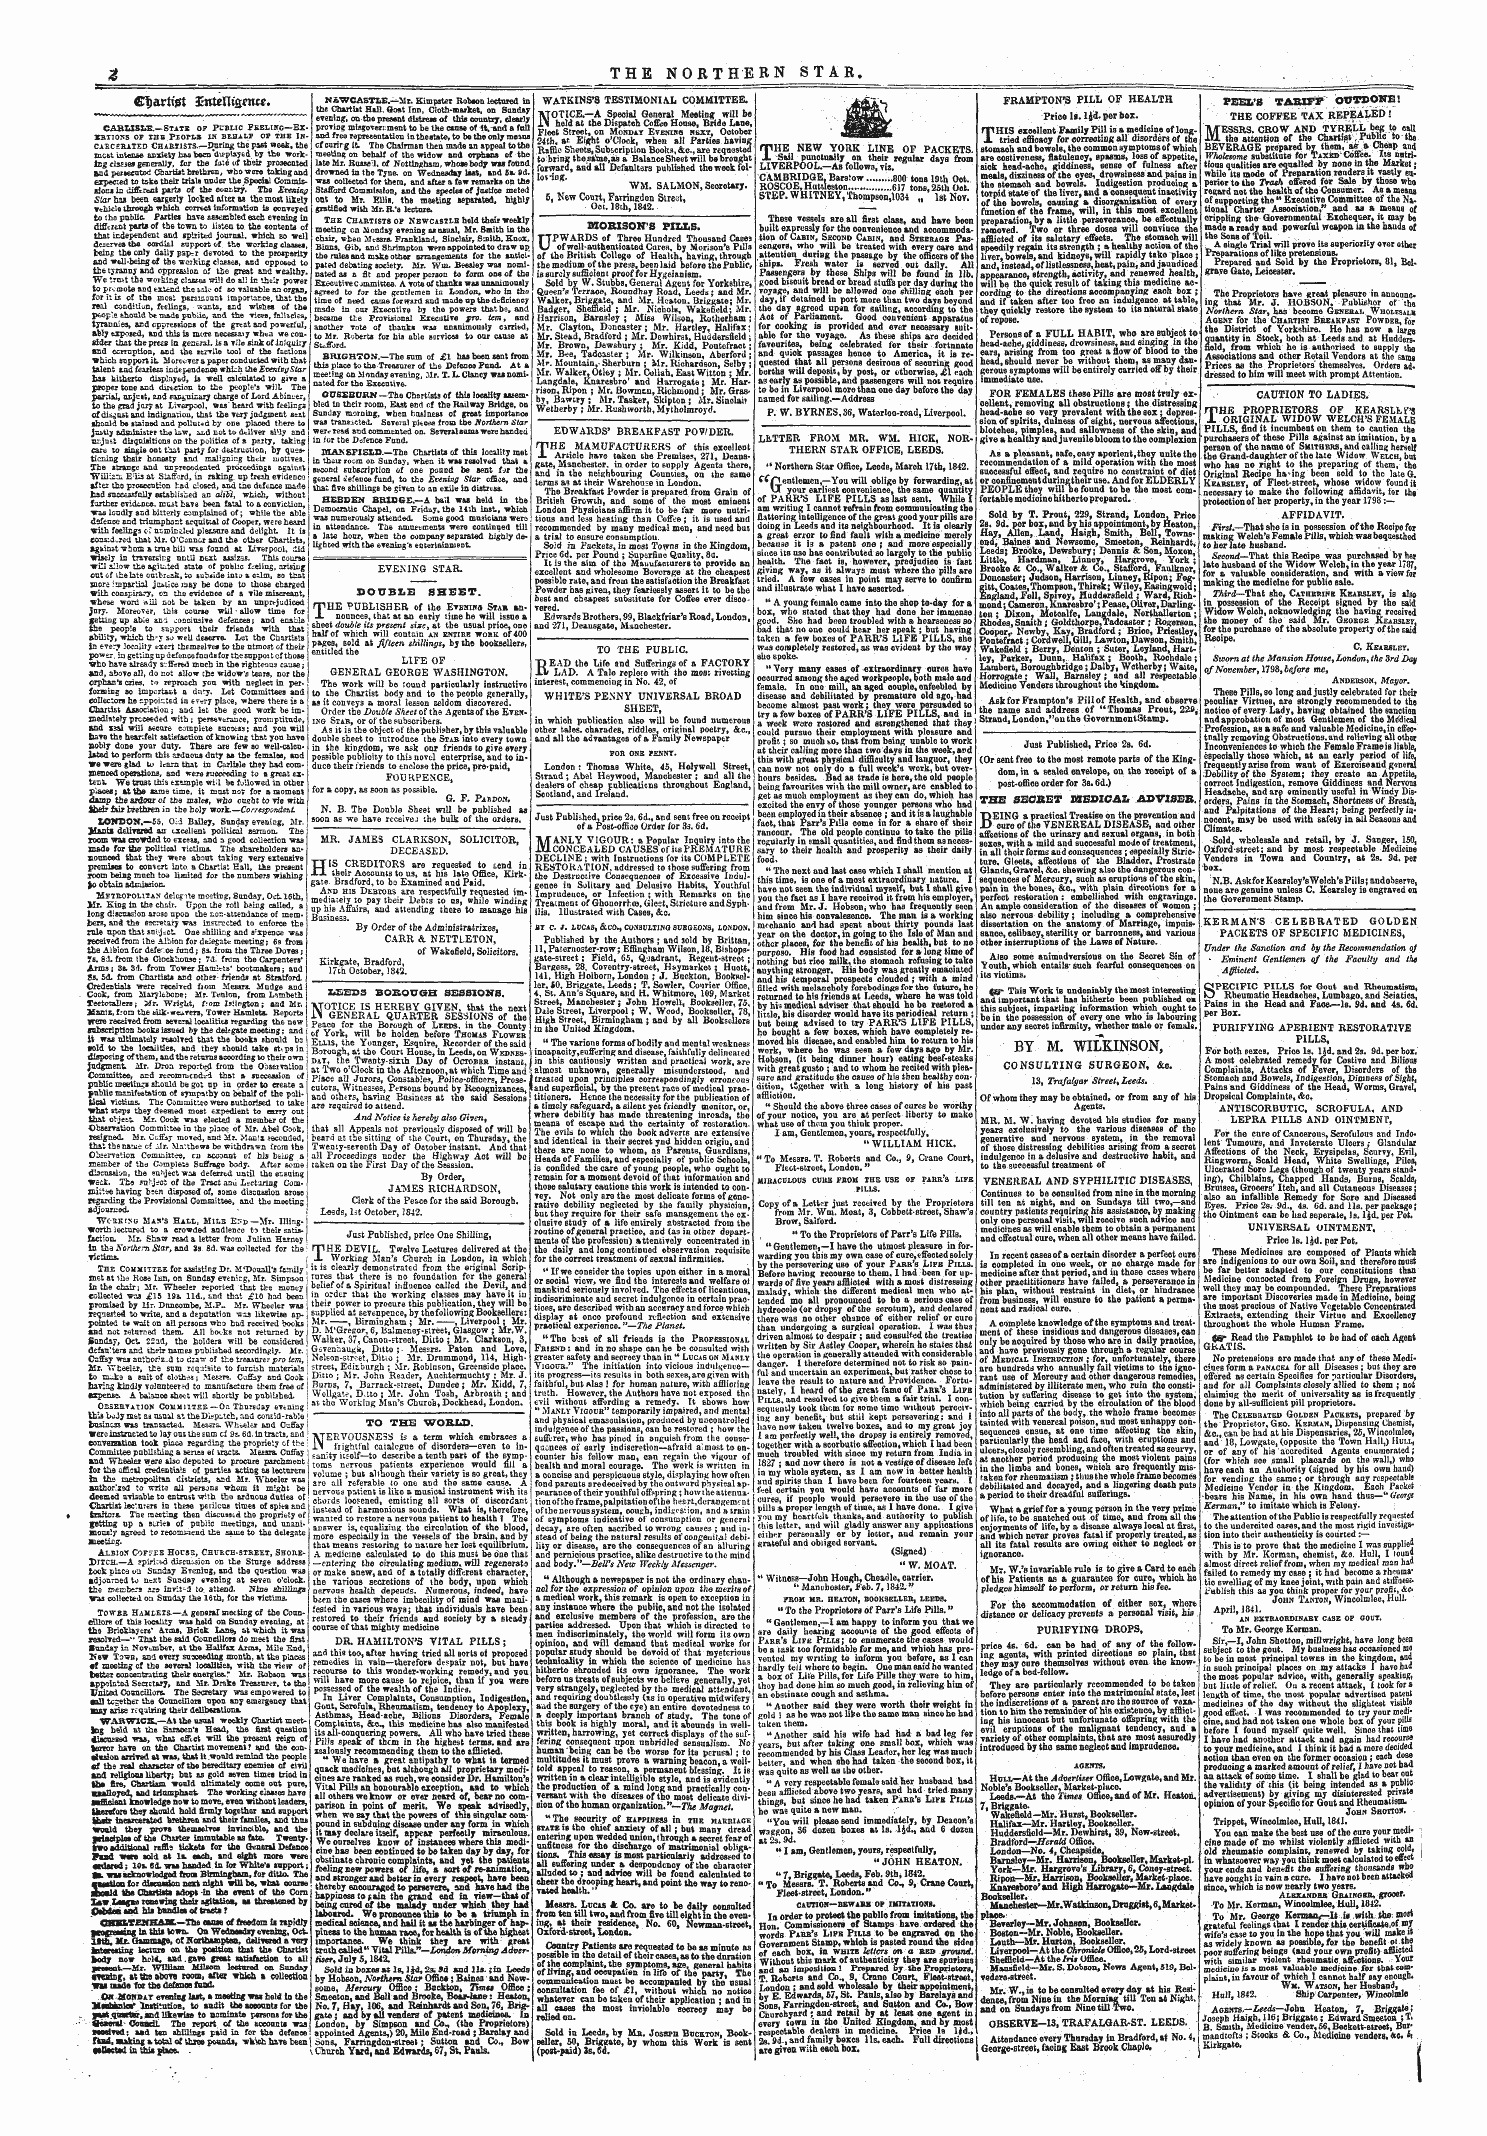 Northern Star (1837-1852): jS F Y, 4th edition - Evening Star.